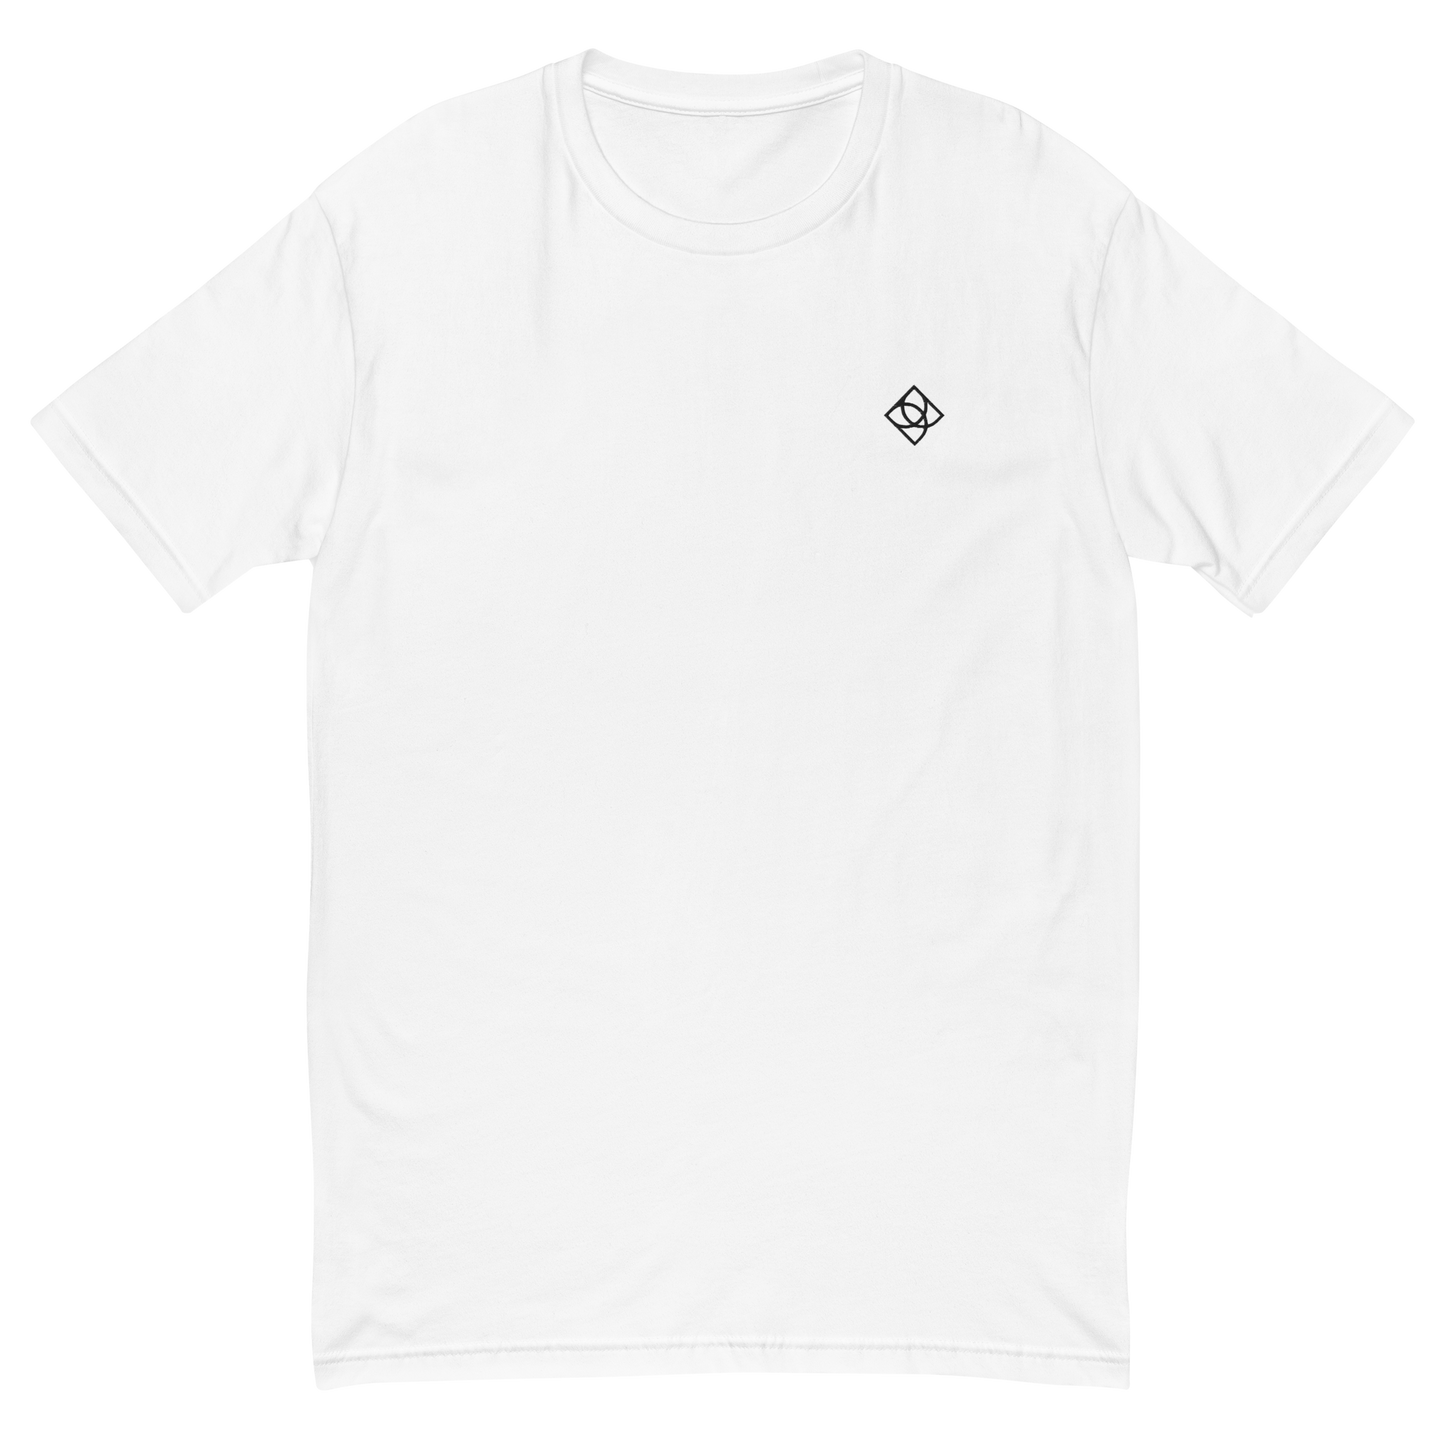 The Men’s Logo T-Shirt